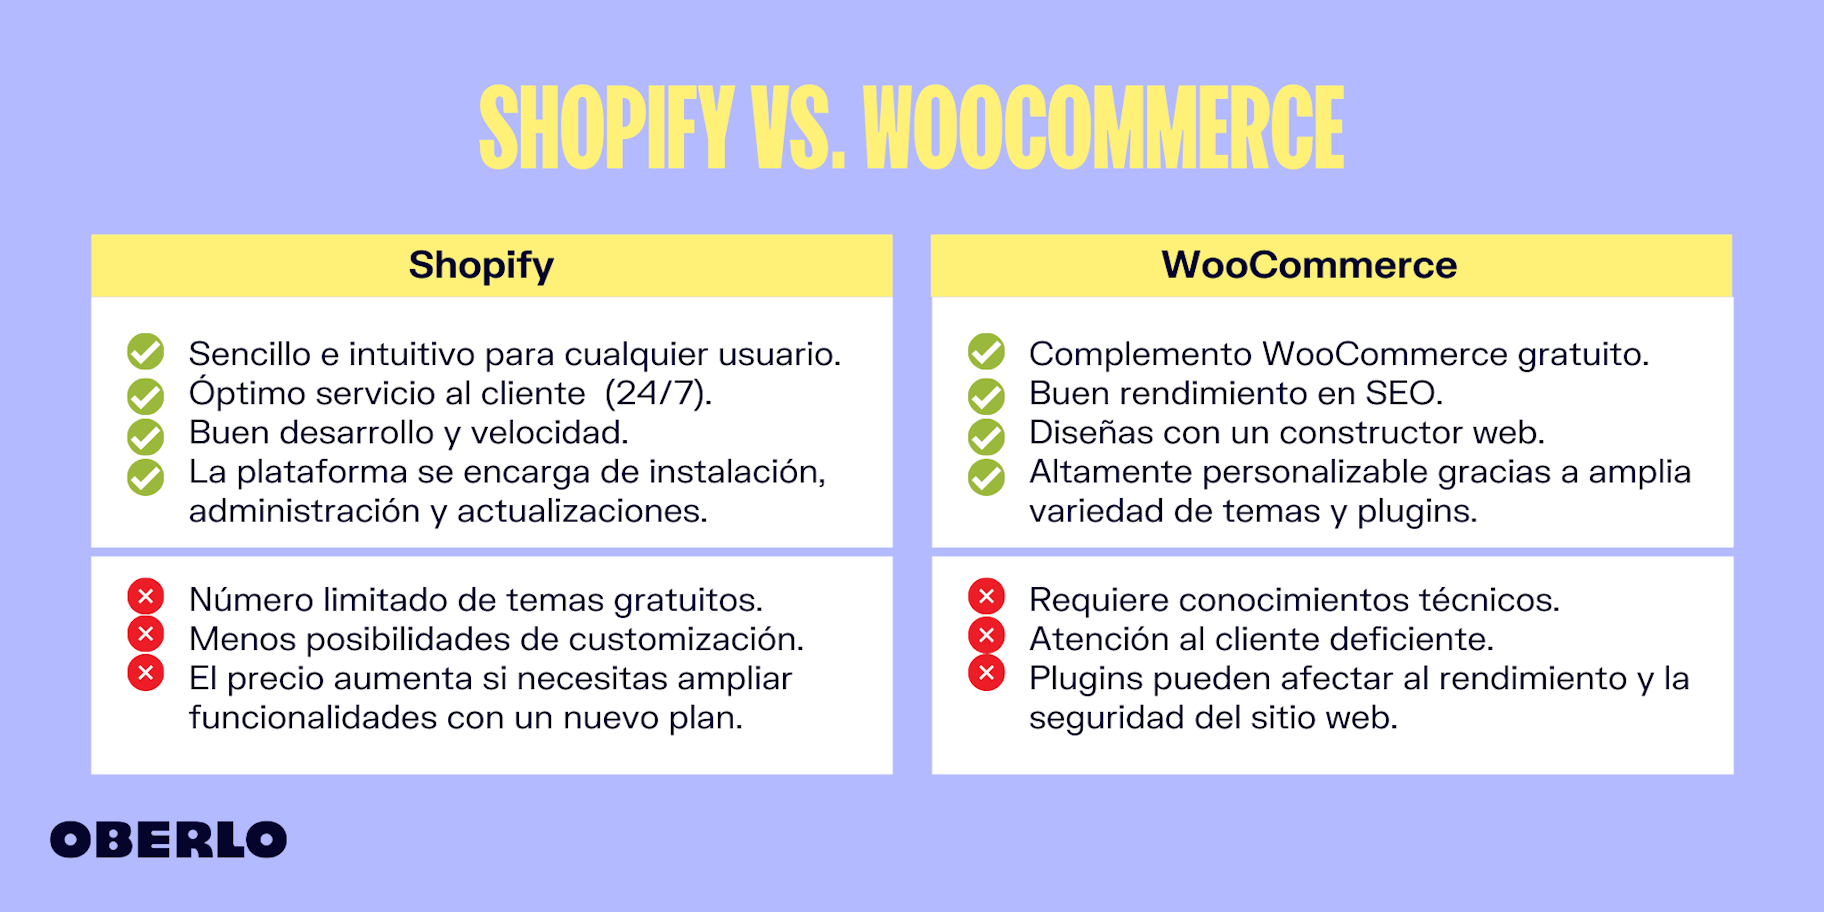 woocommerce vs shopify ventajas e inconvenientes de cada uno